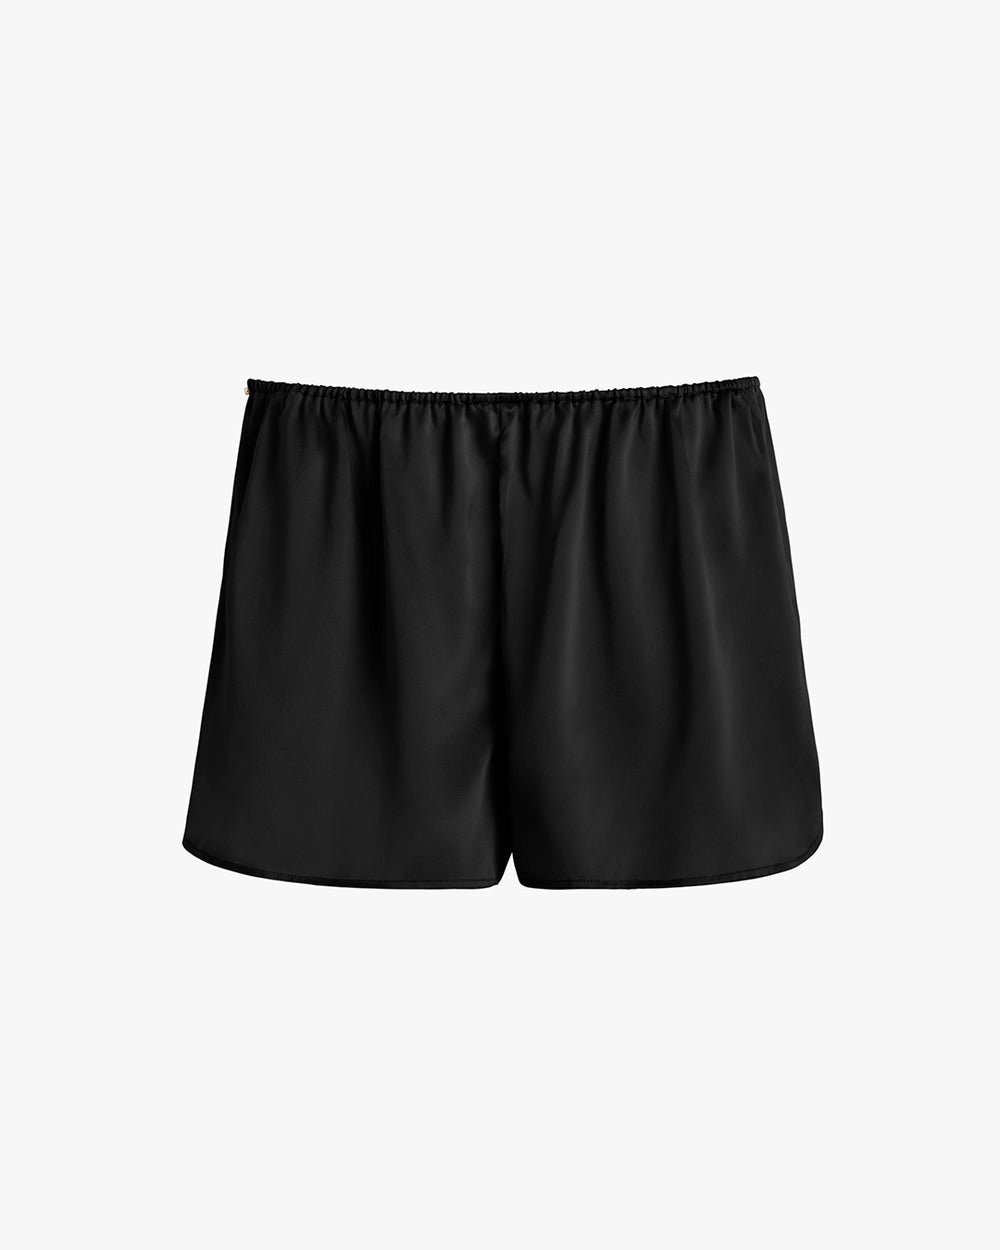 Buy Dorina Fiesta Black Eco Satin Shorts from Next Luxembourg